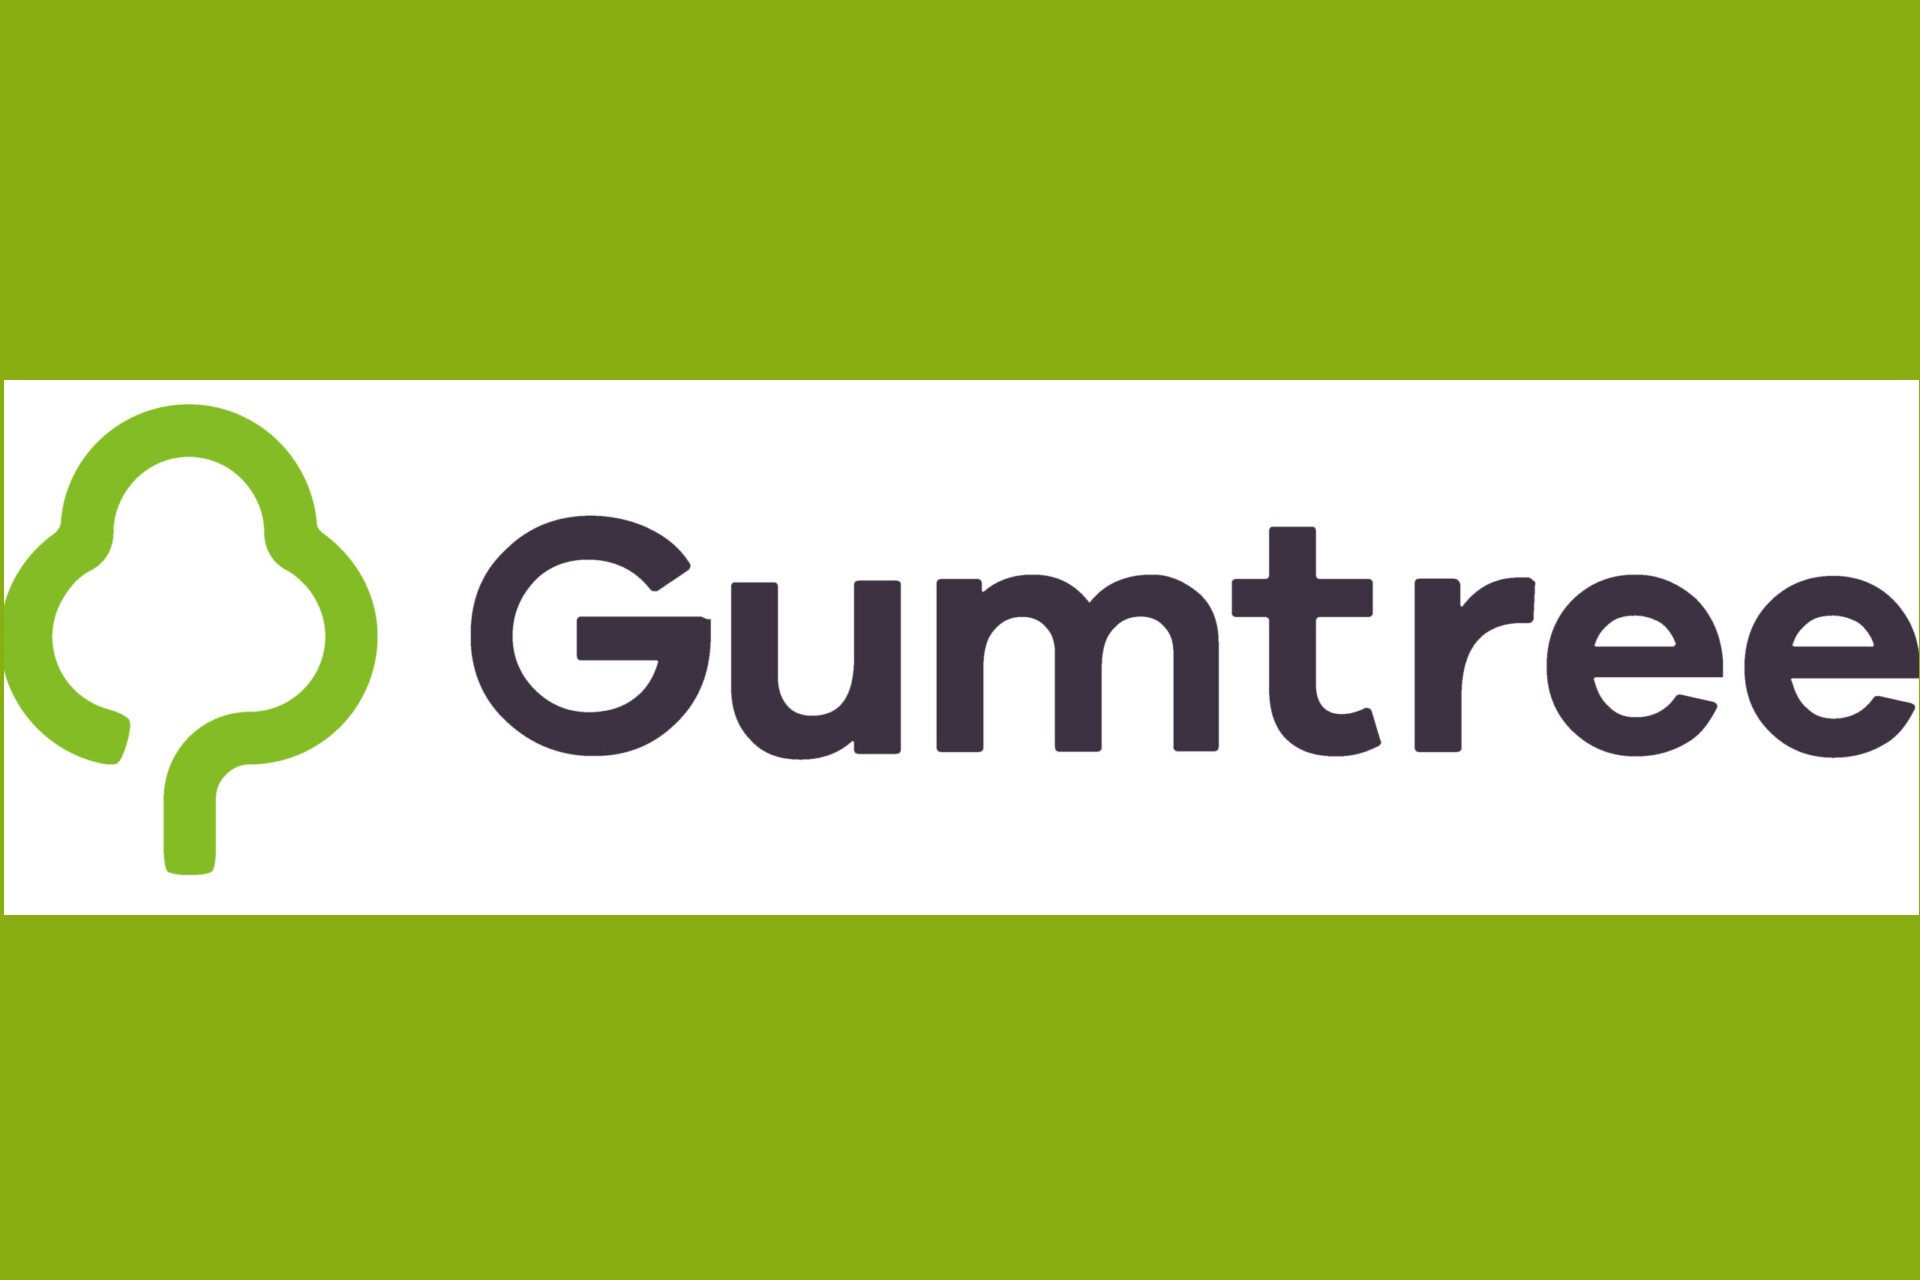 Gumtree